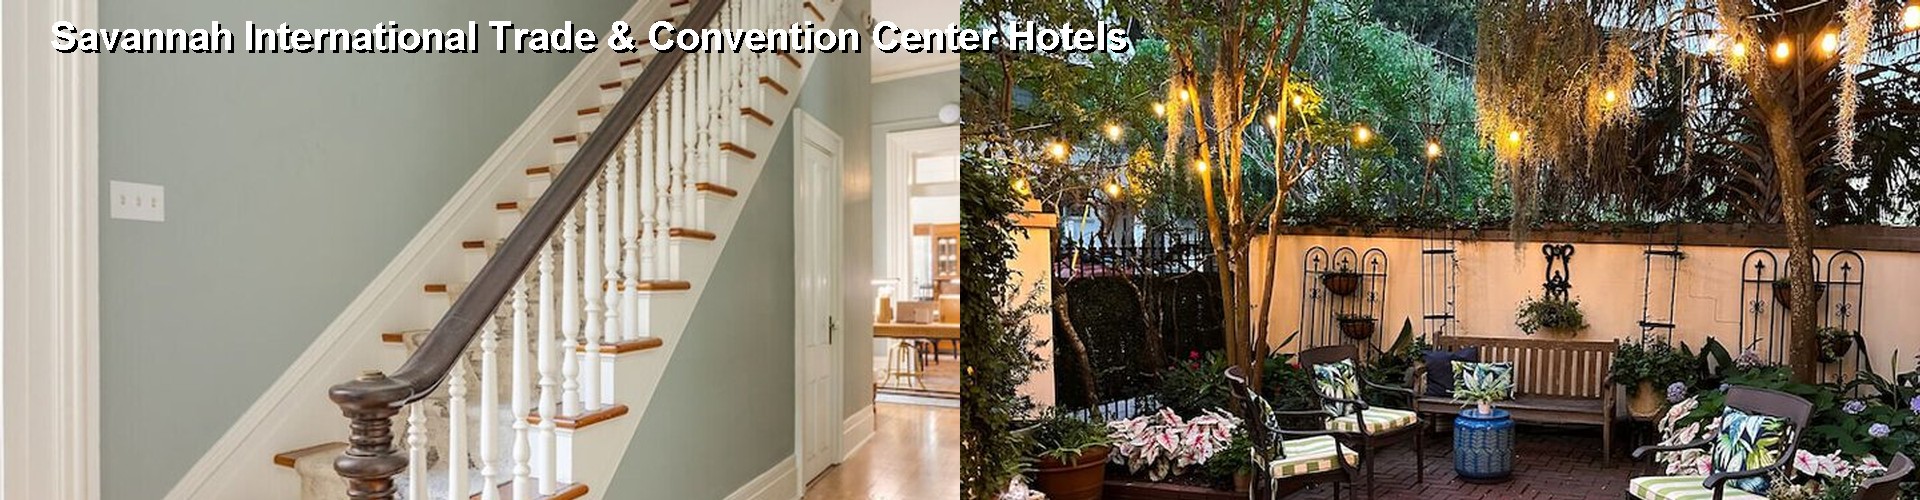 5 Best Hotels near Savannah International Trade & Convention Center